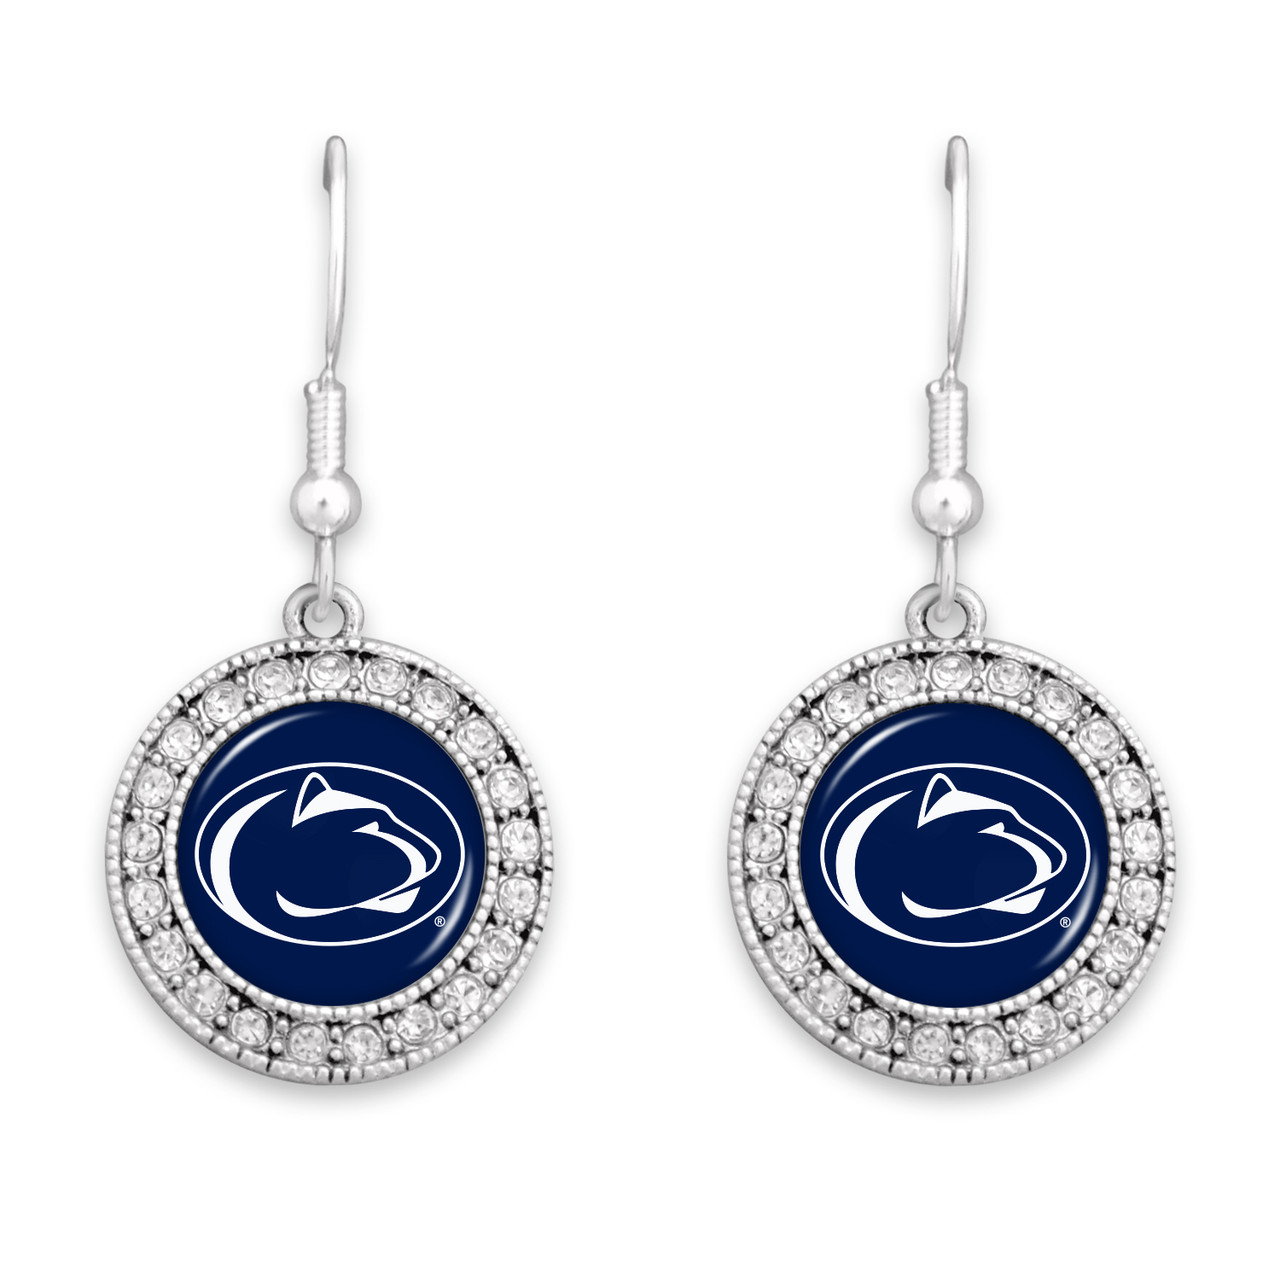 Penn State Nittany Lions Earrings- Kenzie